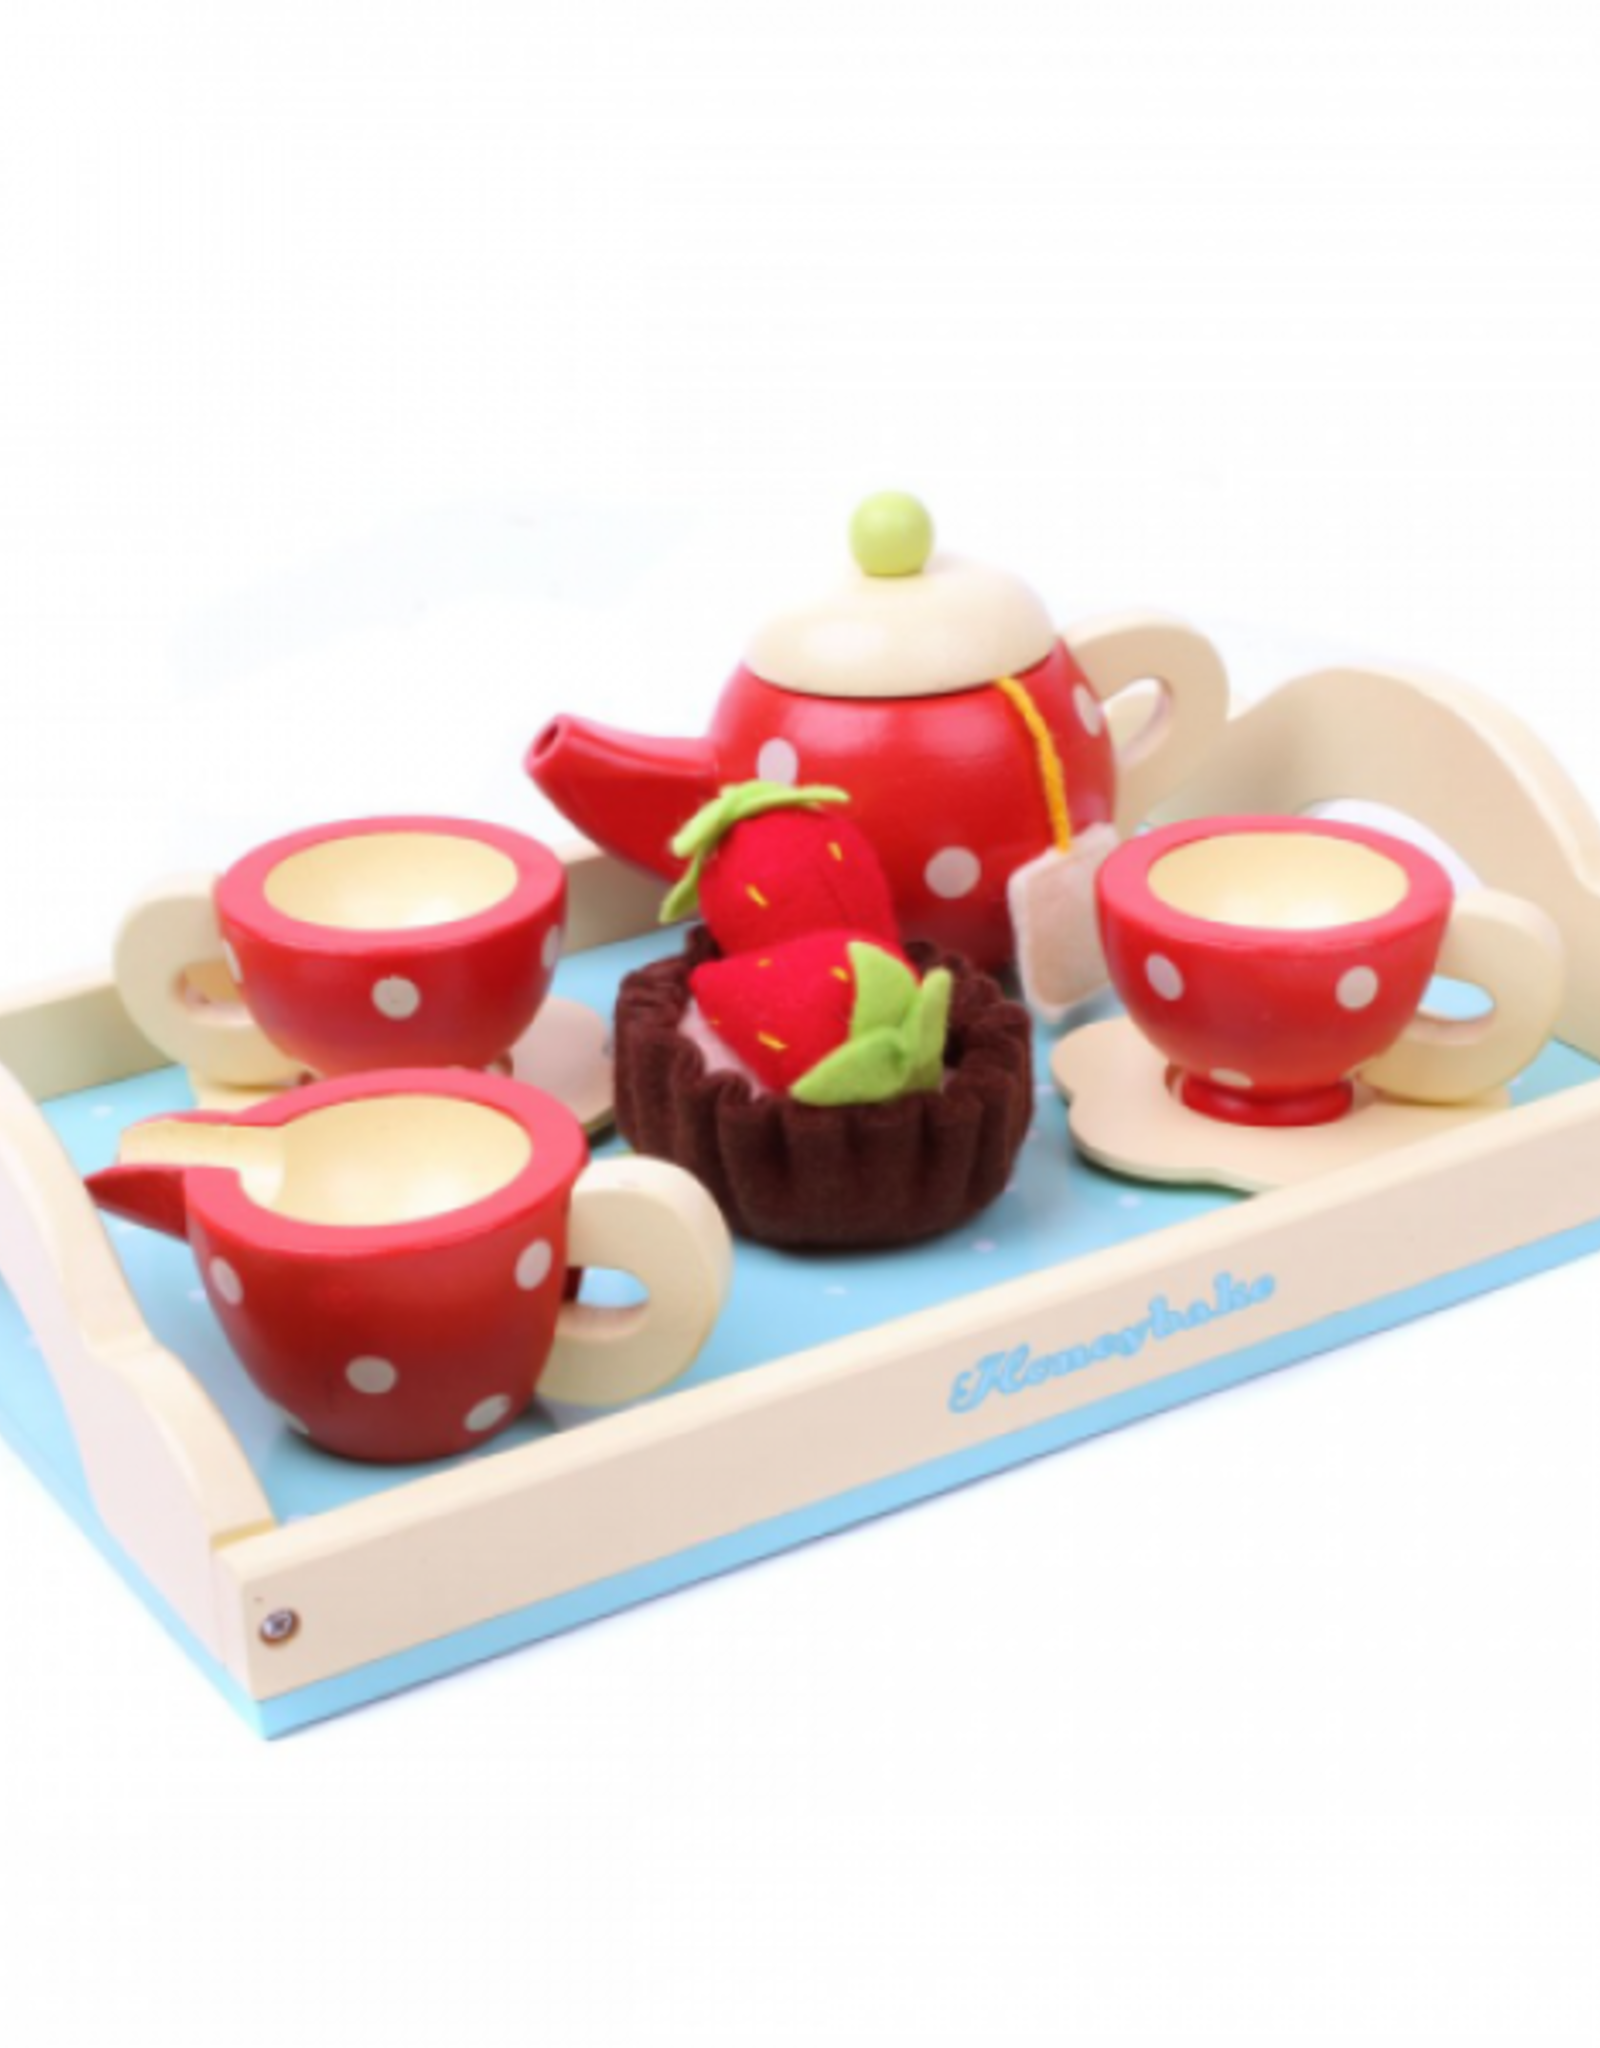 Le Toy Van Honeybake Dotty Bouilloire en bois Cuisine Cafe Tea Set Enfant/Kid BN 